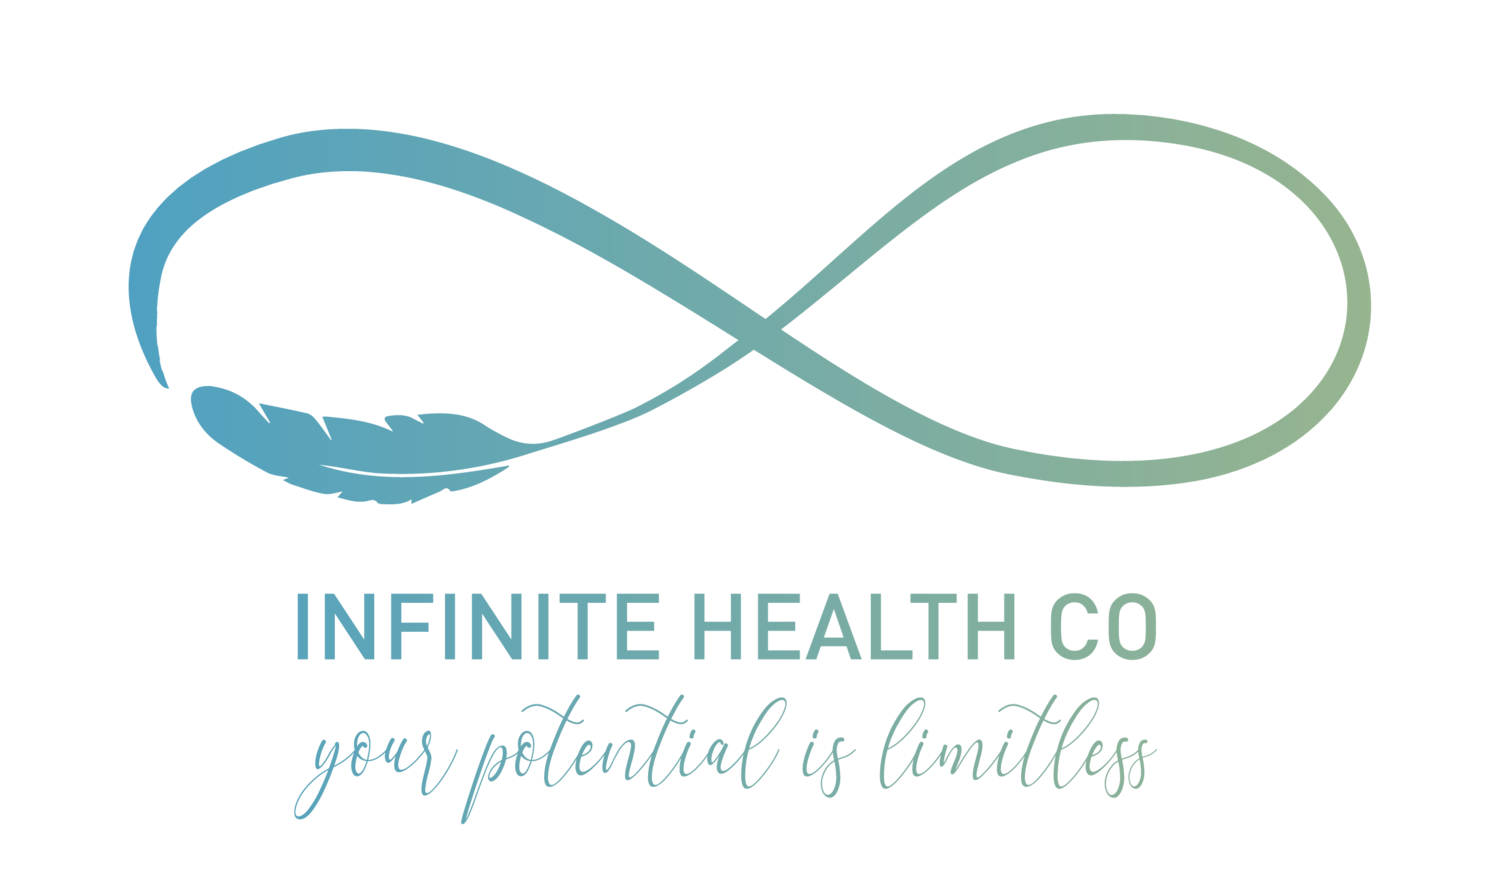 Infinite Health Co